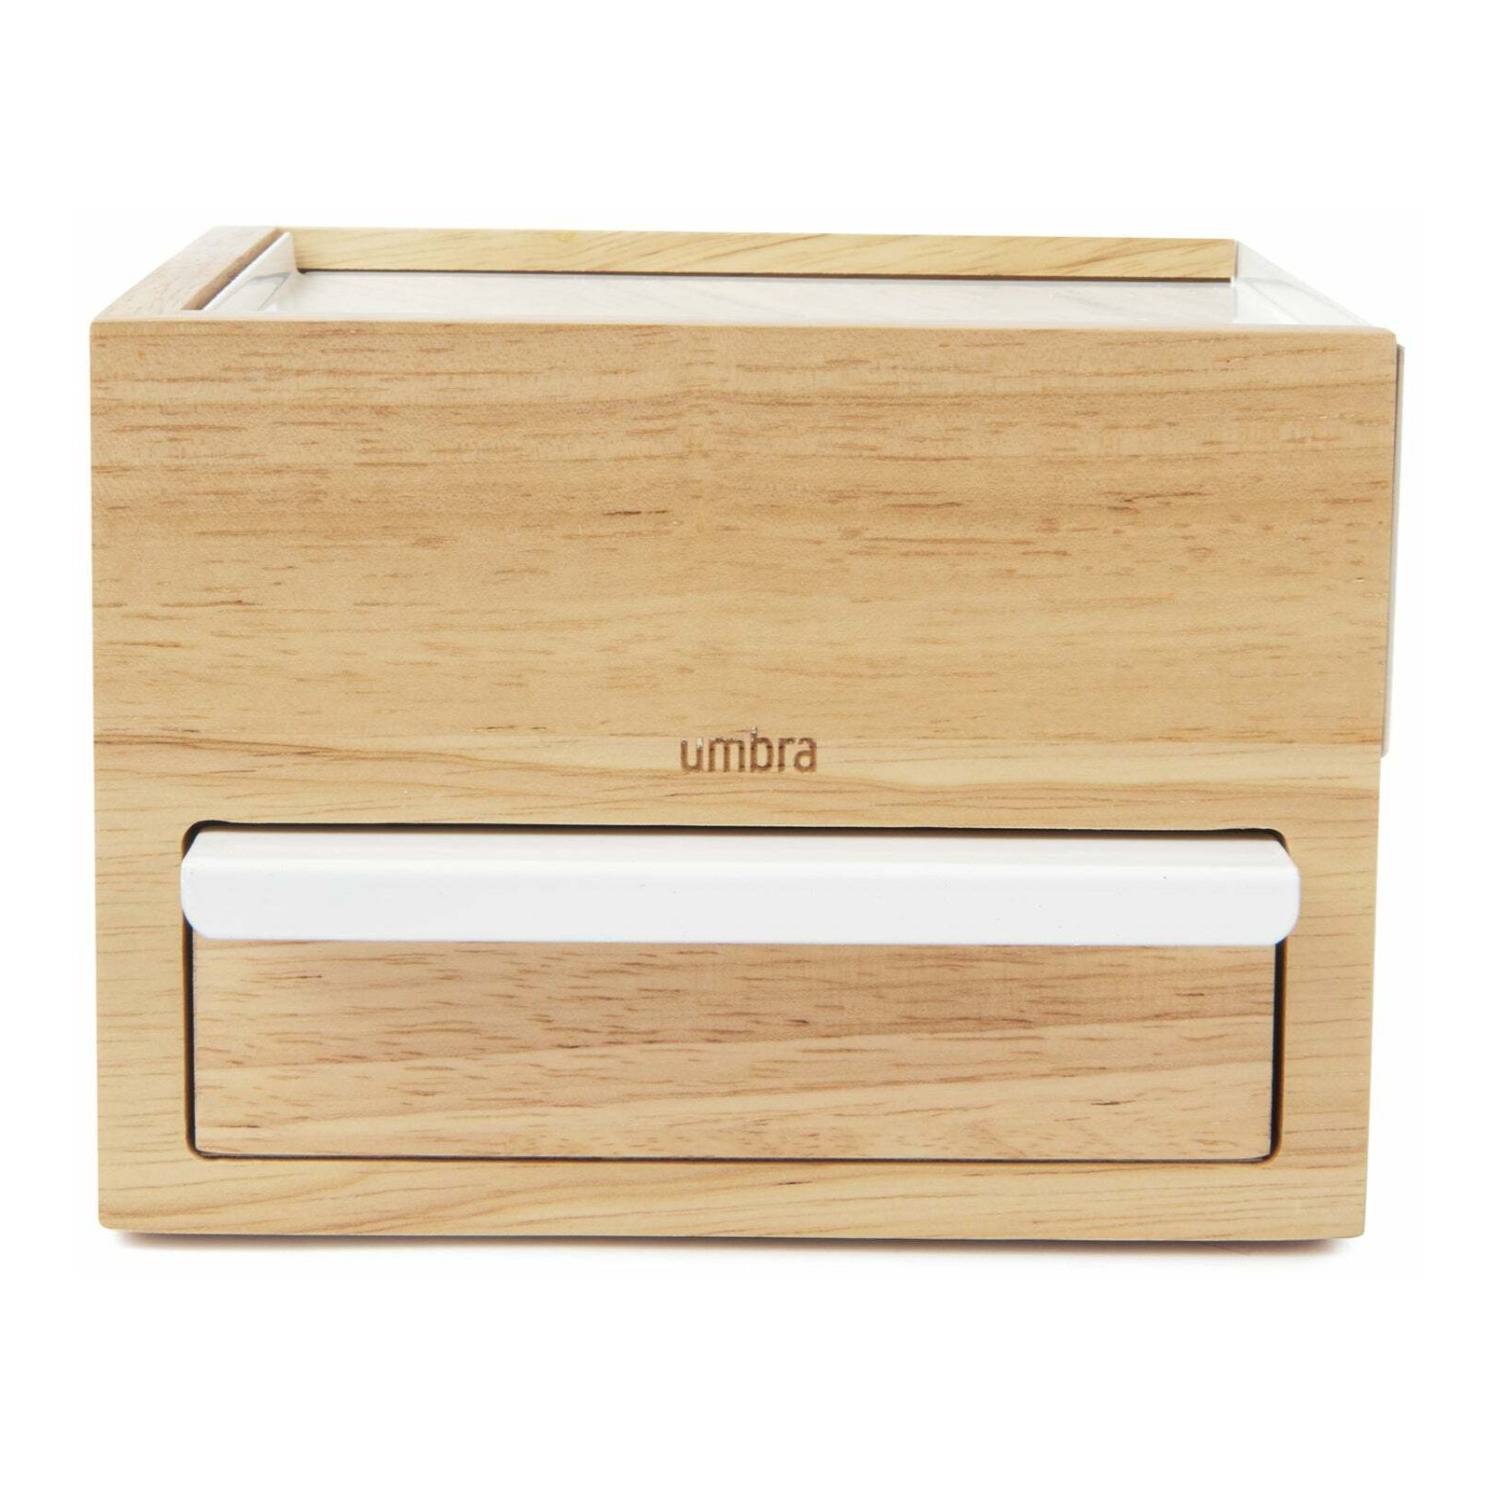 Umbra Mini Stowit Jewelry Box (Natural)